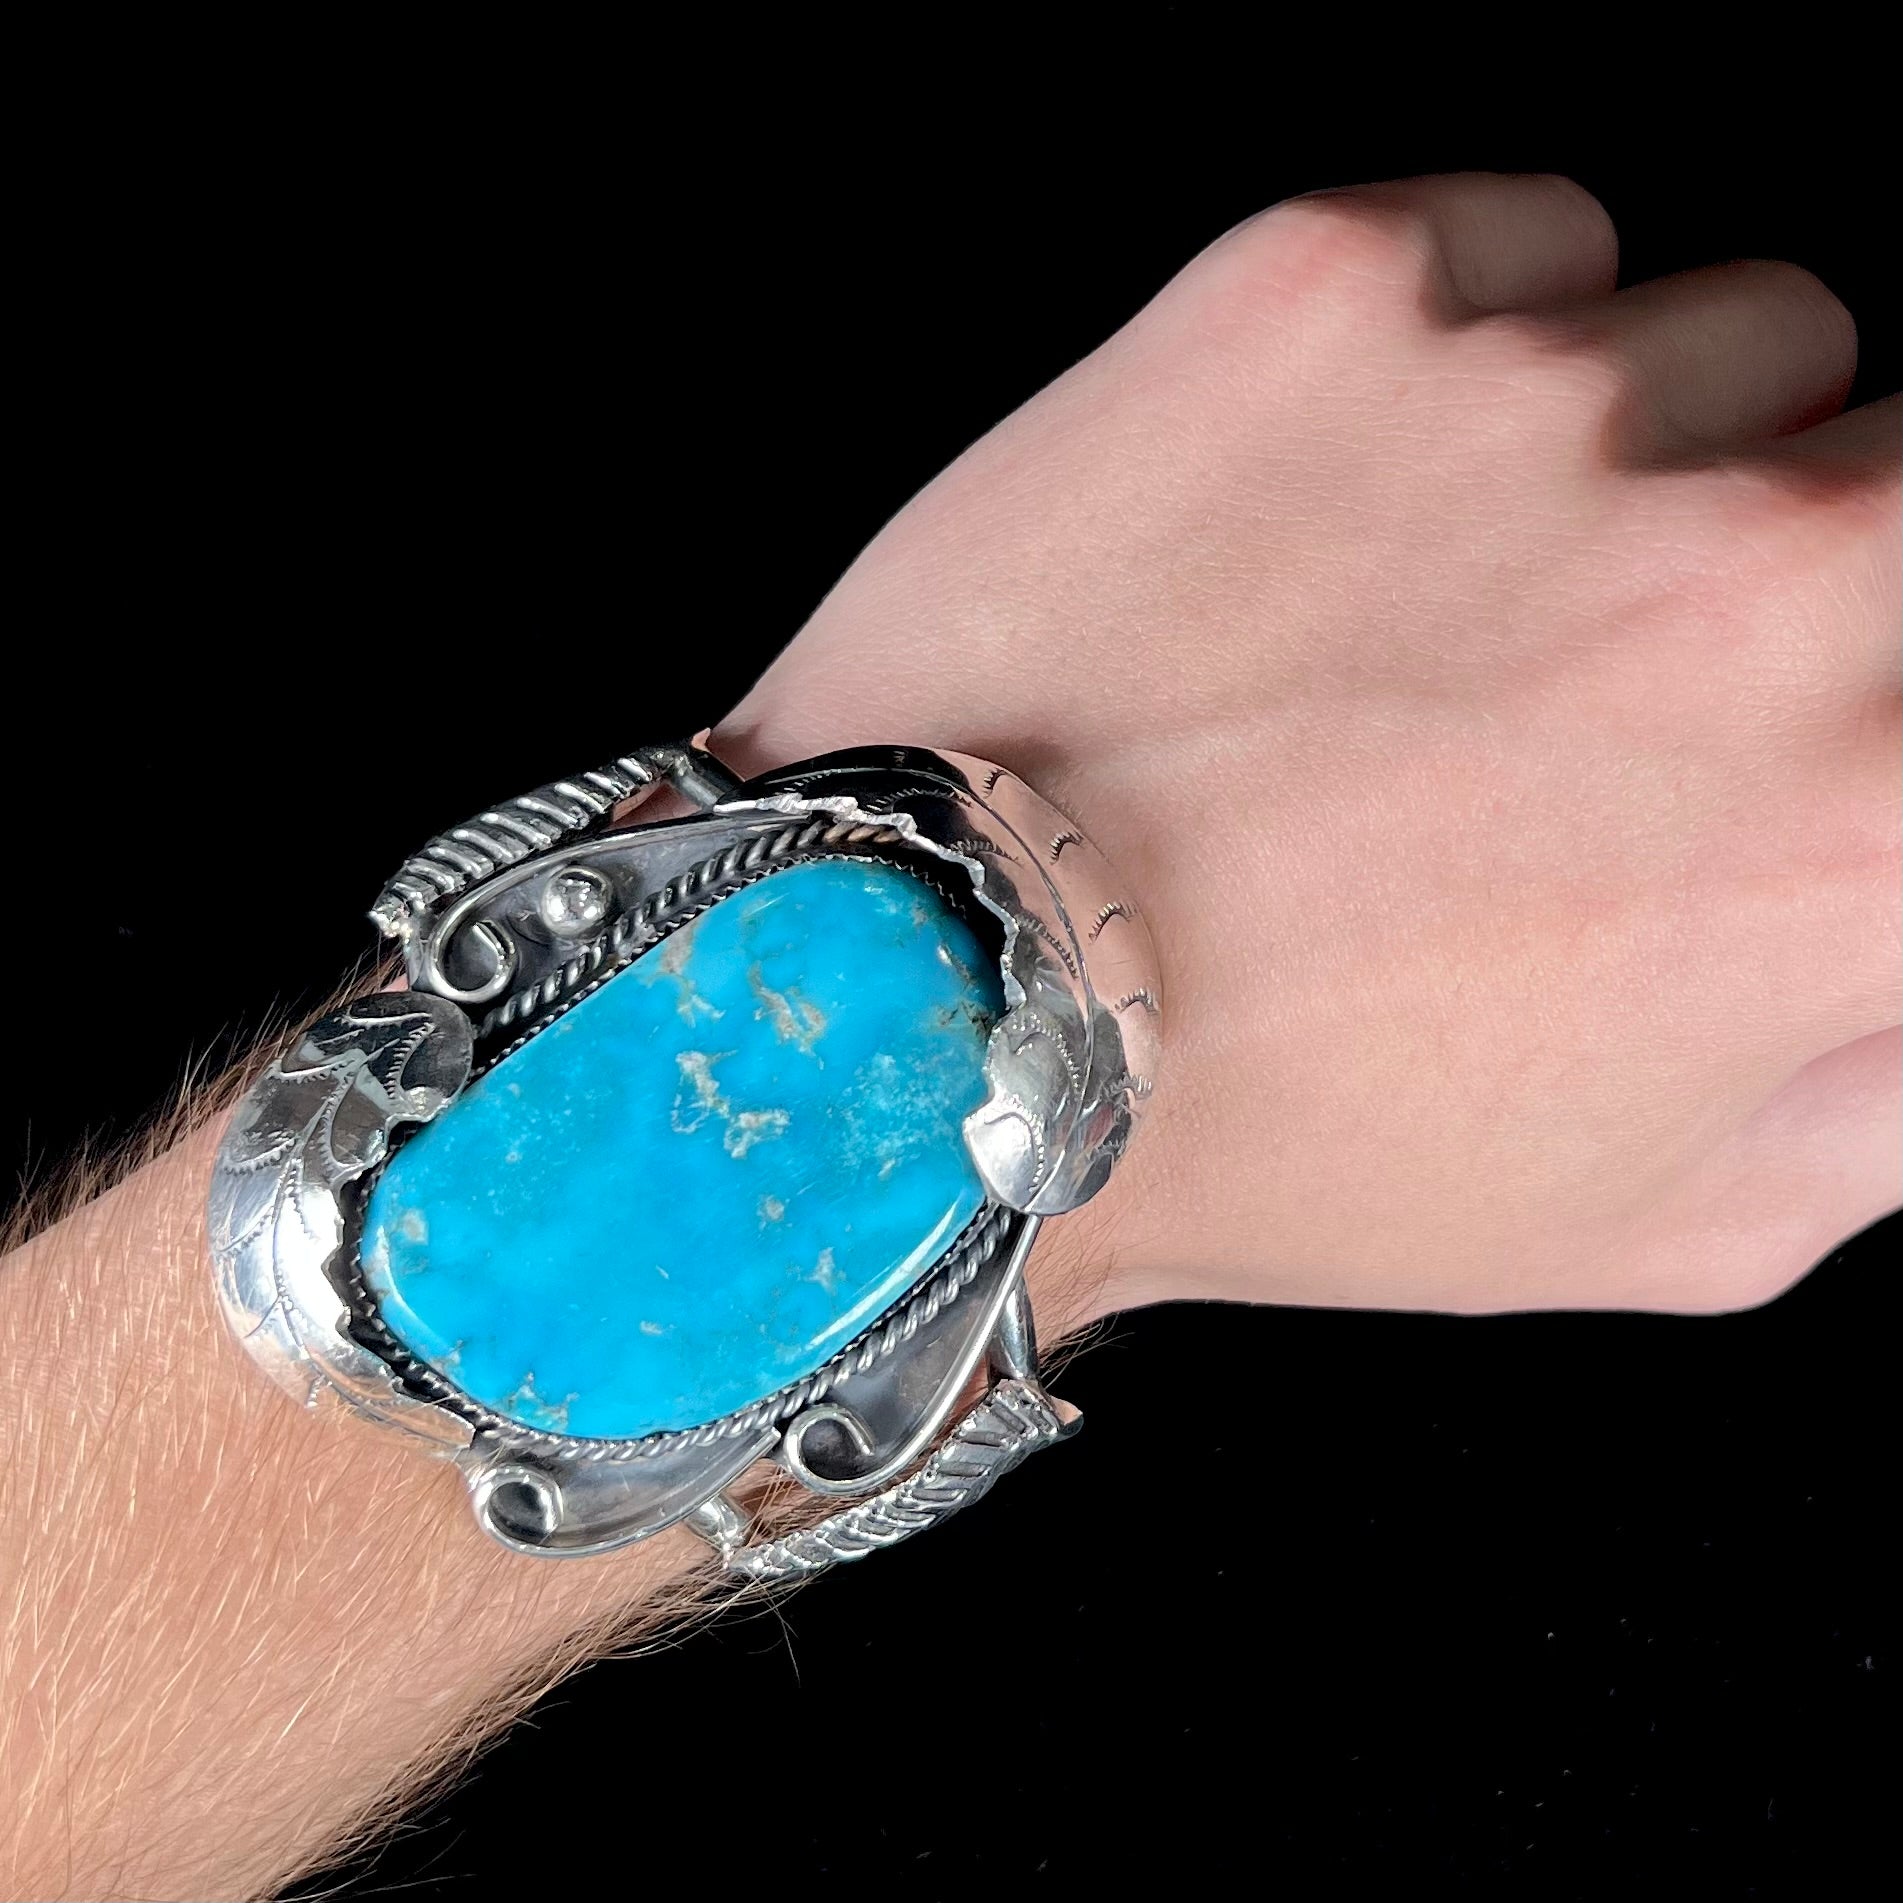 Burton's Imitation Turquoise Cuff Bracelet